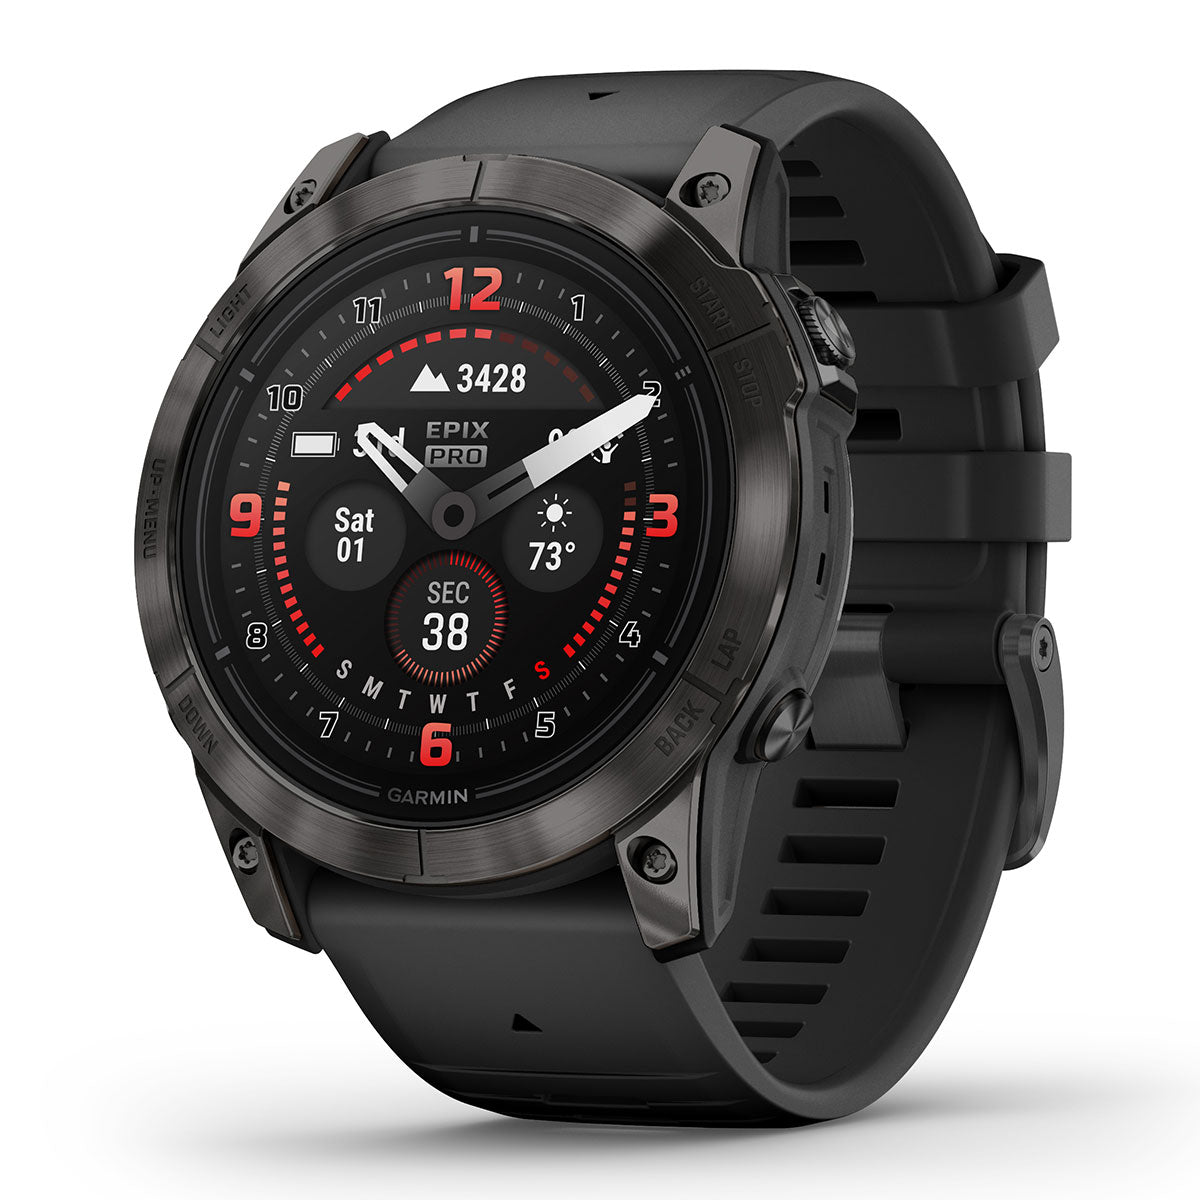 Shop Garmin epix Pro (Gen 2) Multisport GPS Smartwatch — PlayBetter